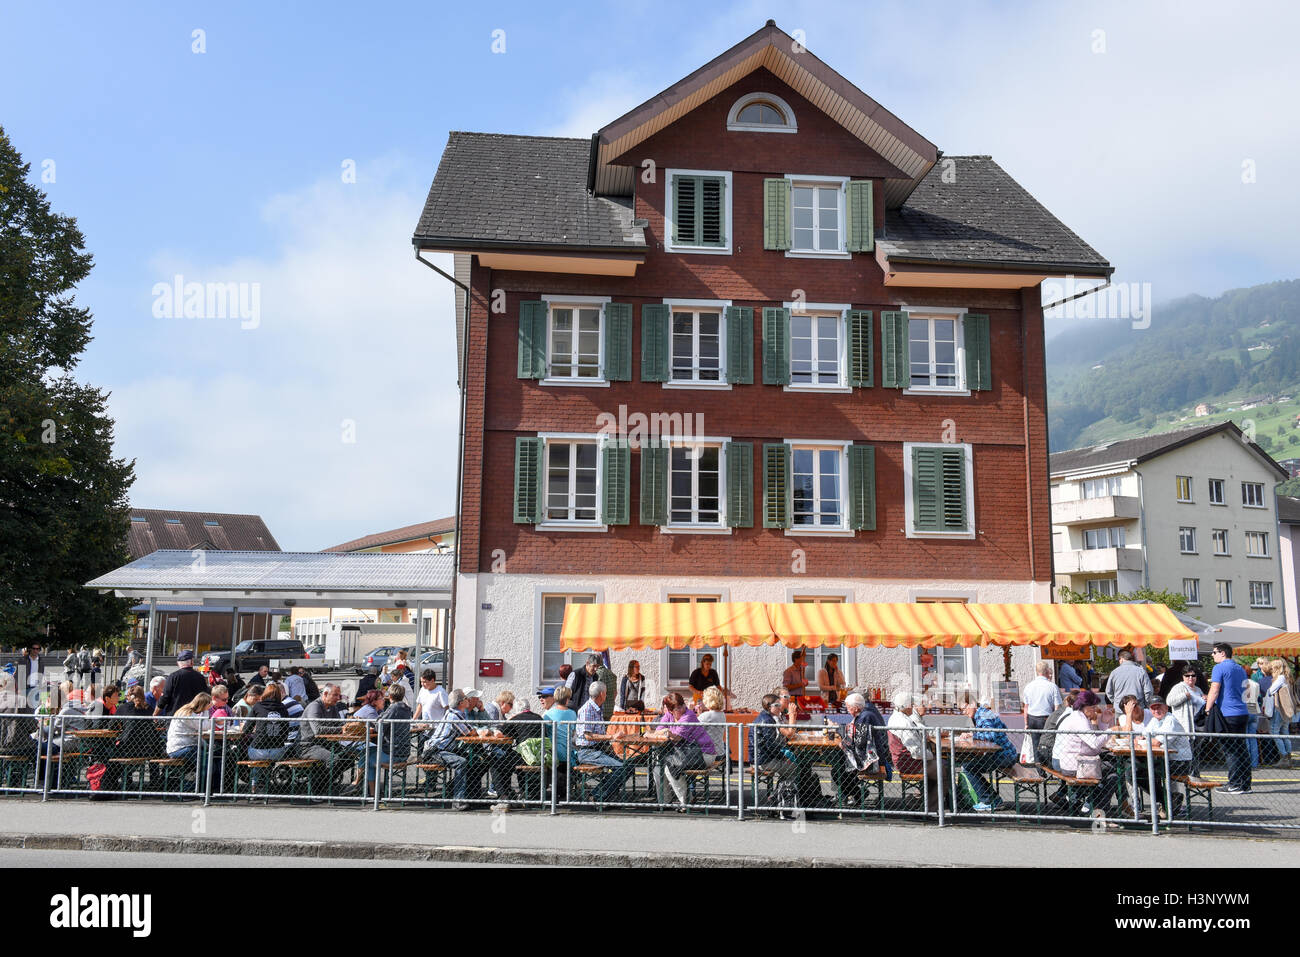 Ennetbuergen, Switzerland - 24 September 2016: People eating and drinking on street restaurants at Ennetbuergen on the Swiss alp Stock Photo